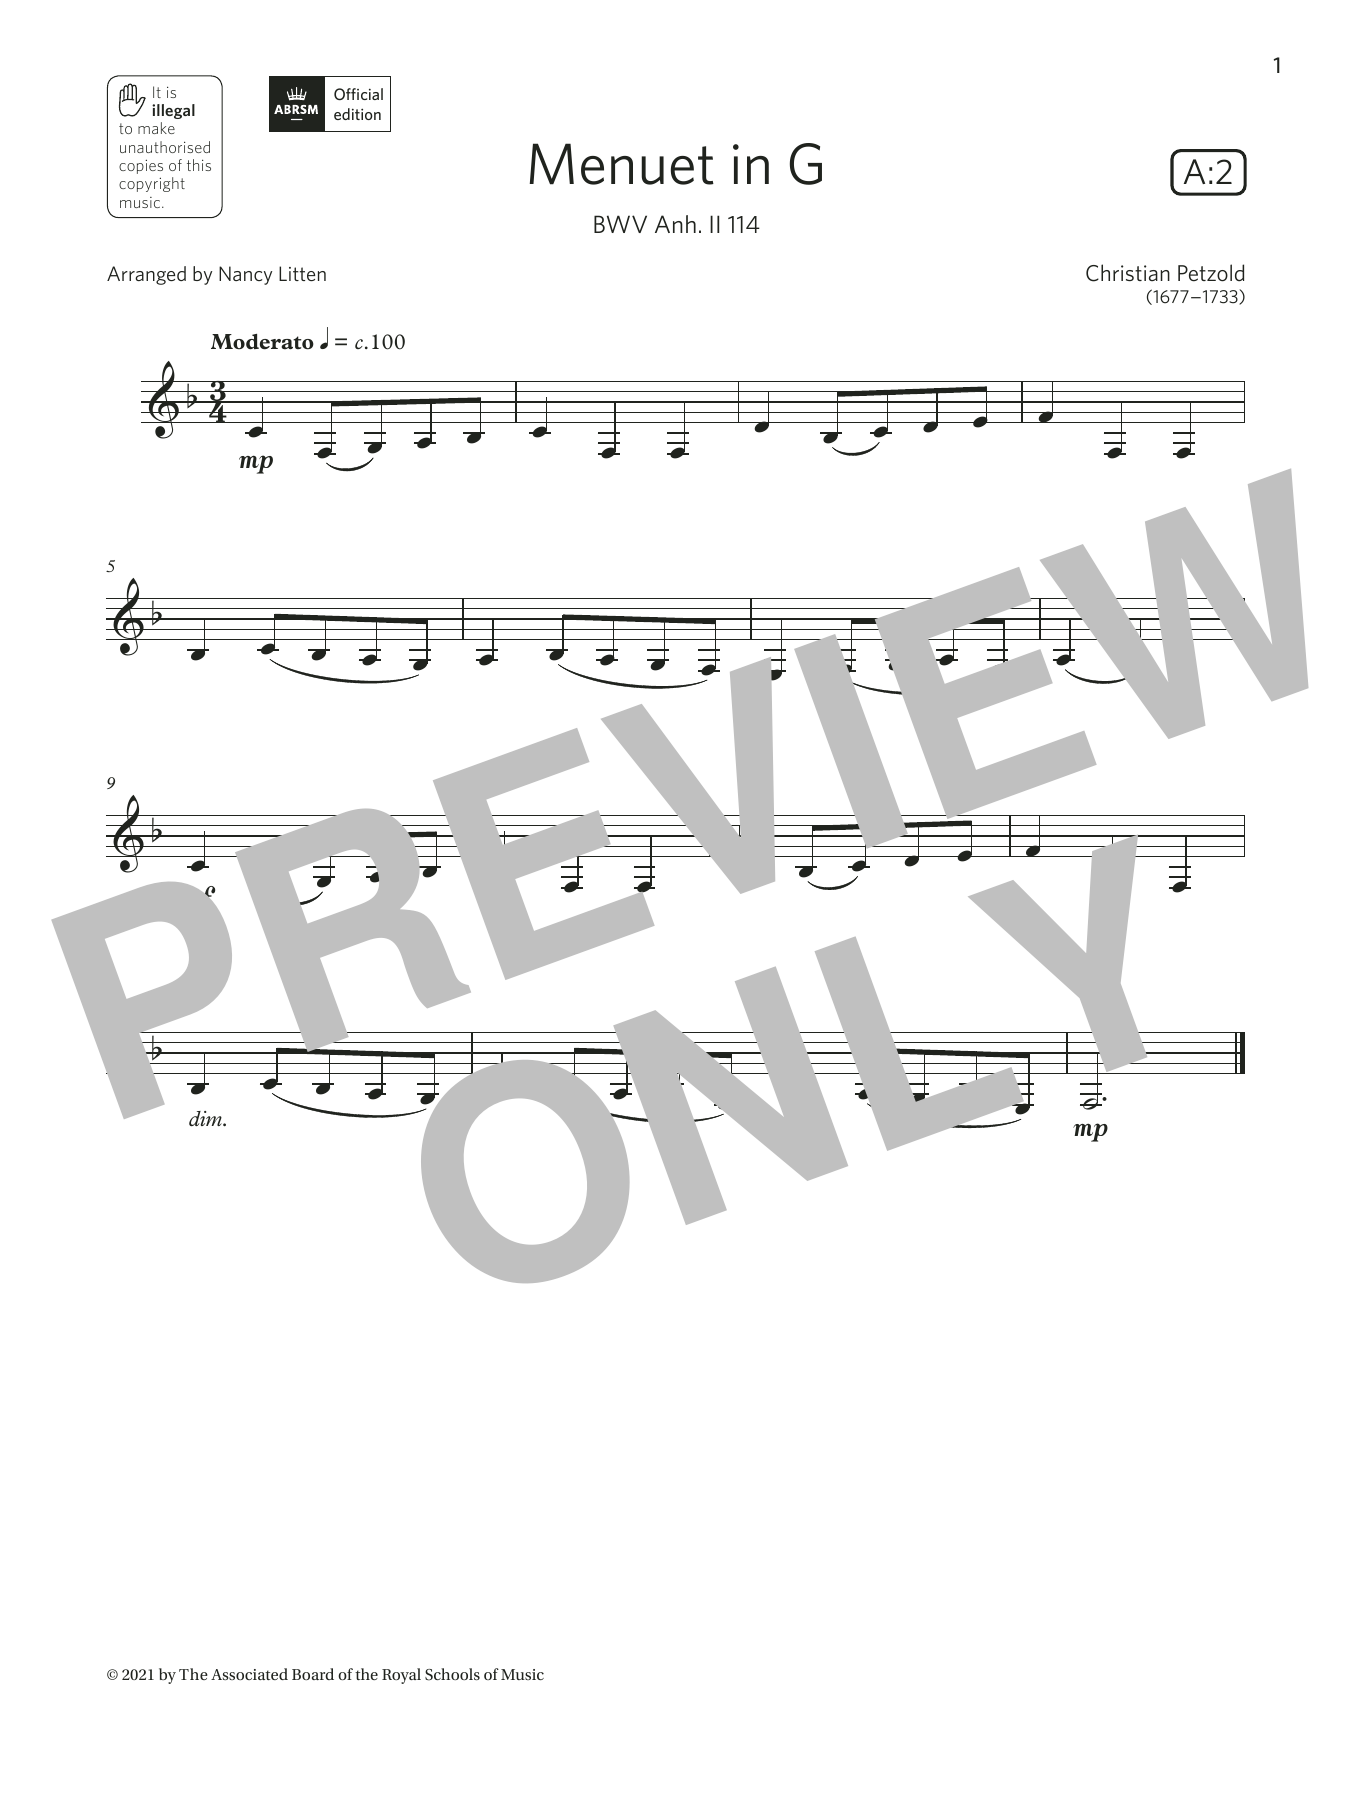 Download Christian Petzold Menuet in G, BWV Anh. II 114 (Grade 1 Sheet Music